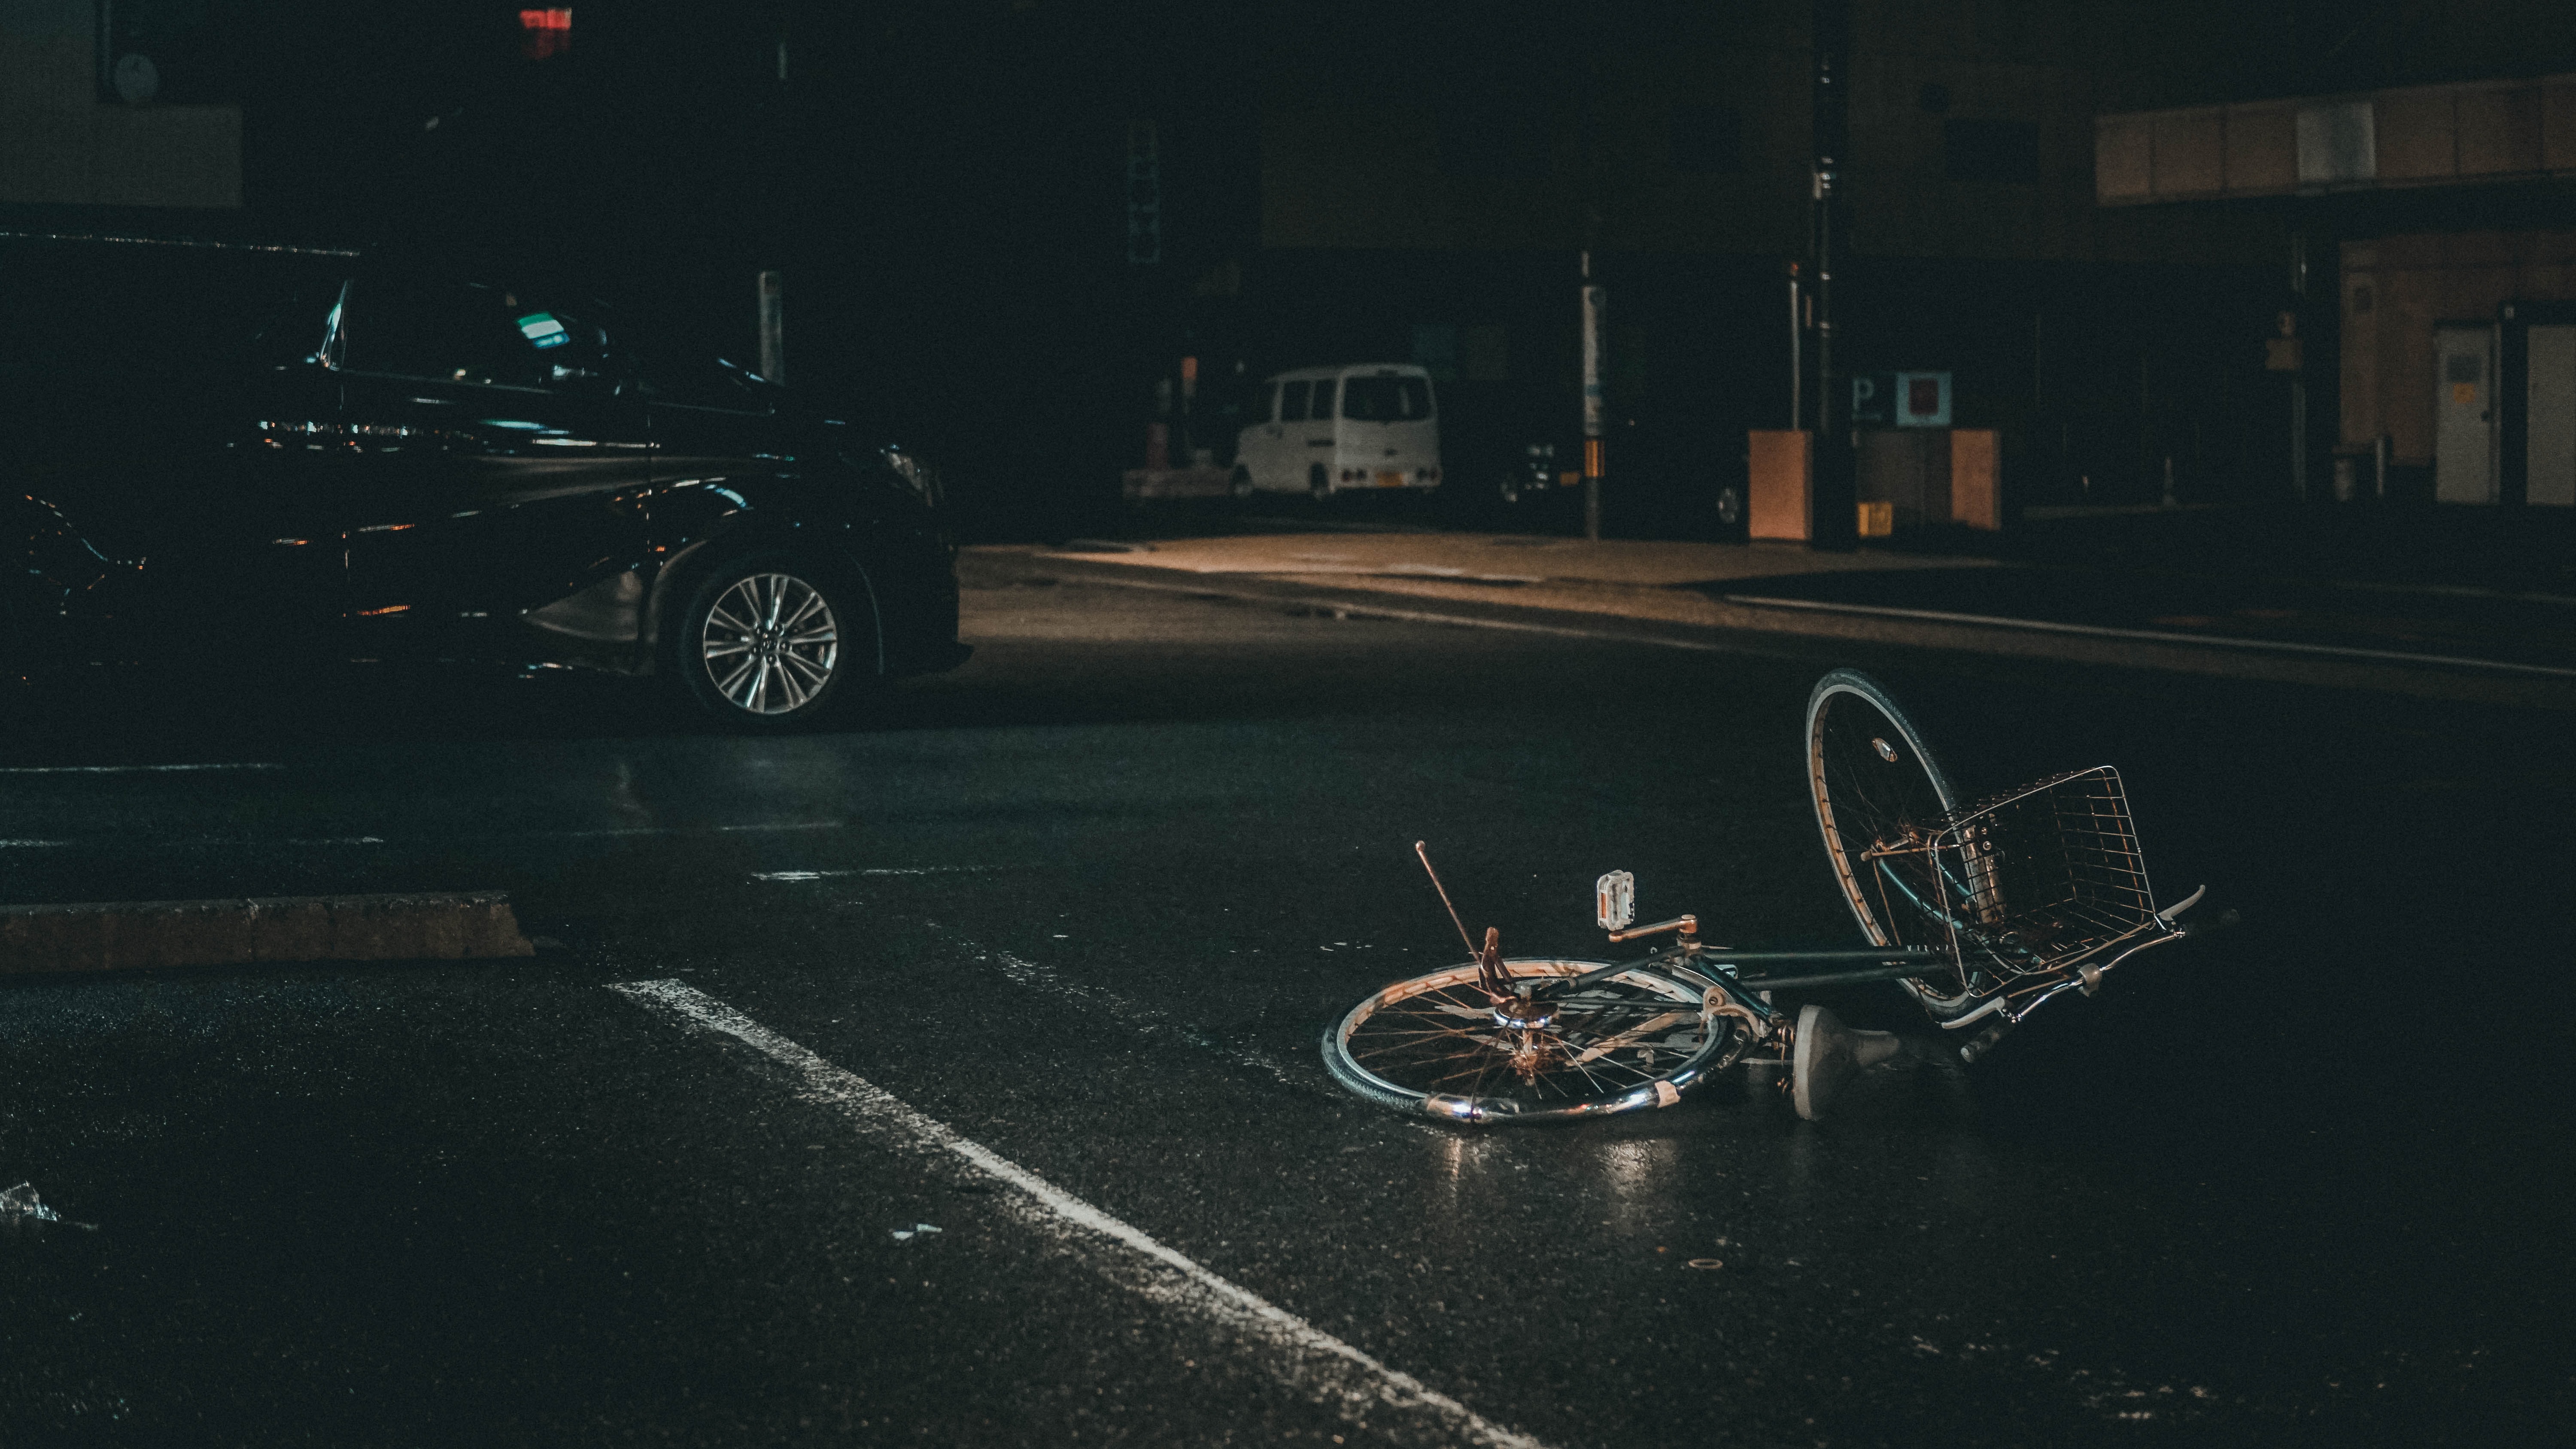 Van and bike accident at night; image by Ian Valerio, via Unsplash.com.